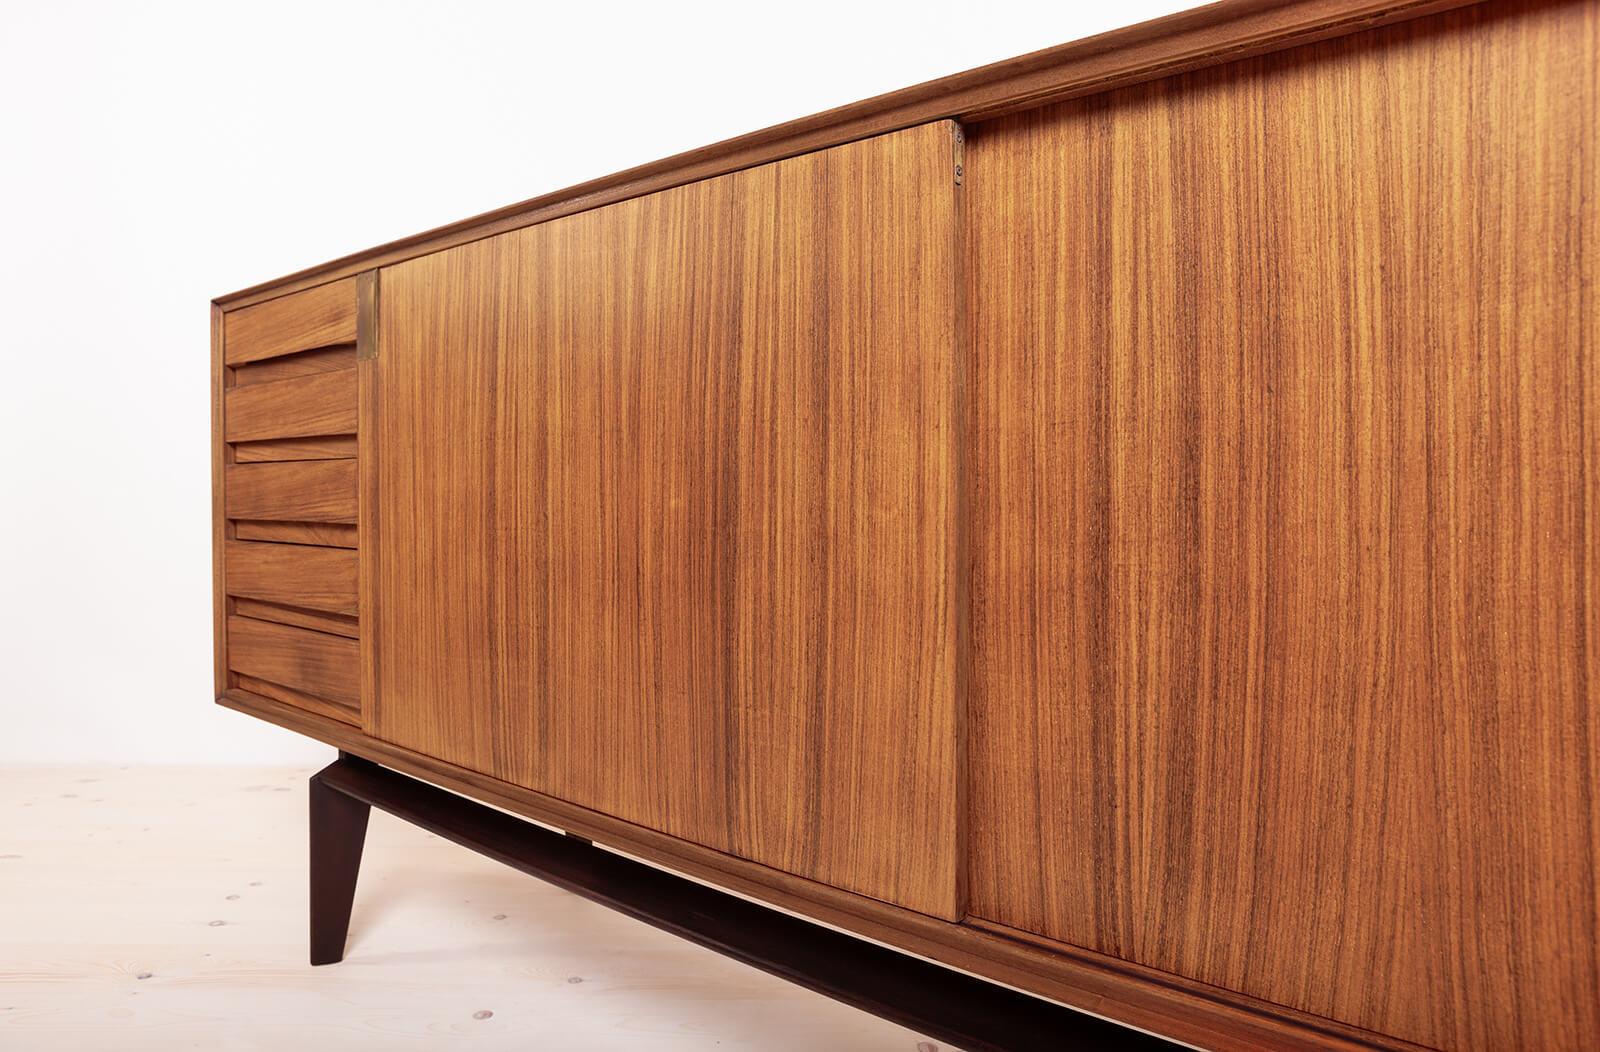 Vintage Midcentury Sideboard: Edmondo Palutari Design, Teak Wood & Brass Details 5